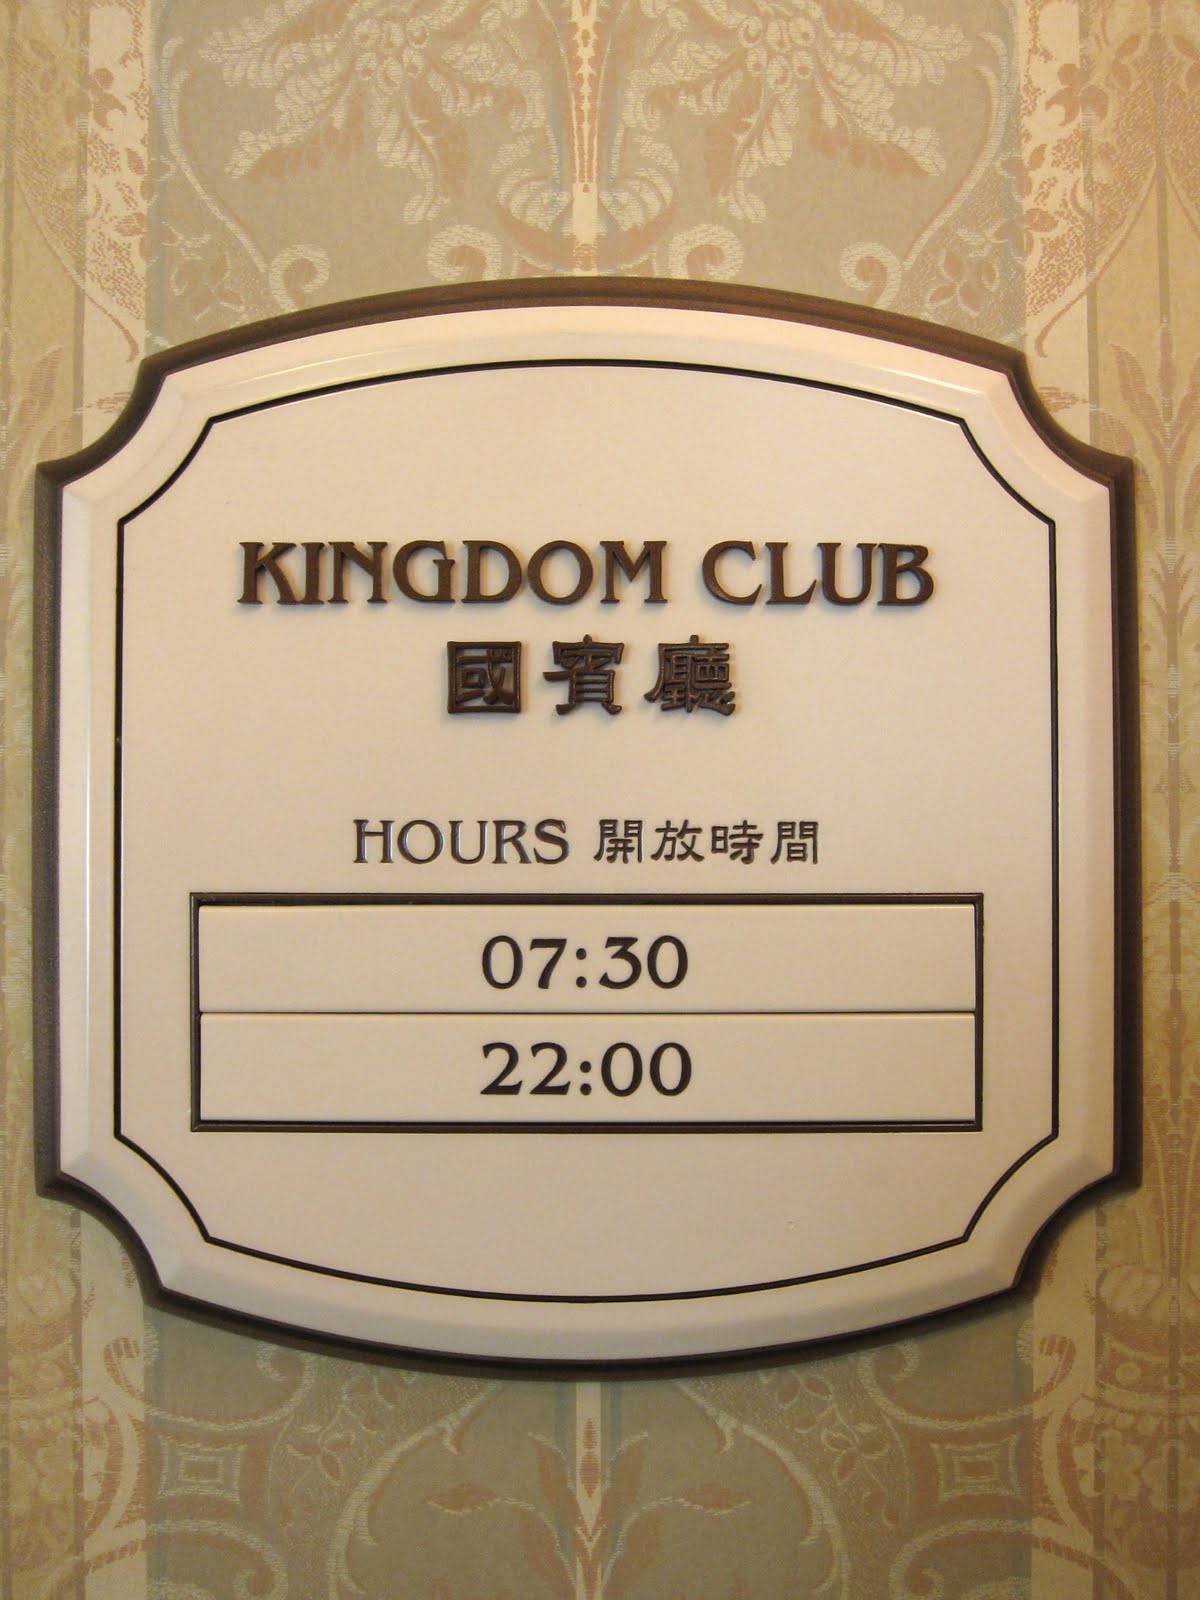 hong kong disneyland hotel kingdom club hours pic